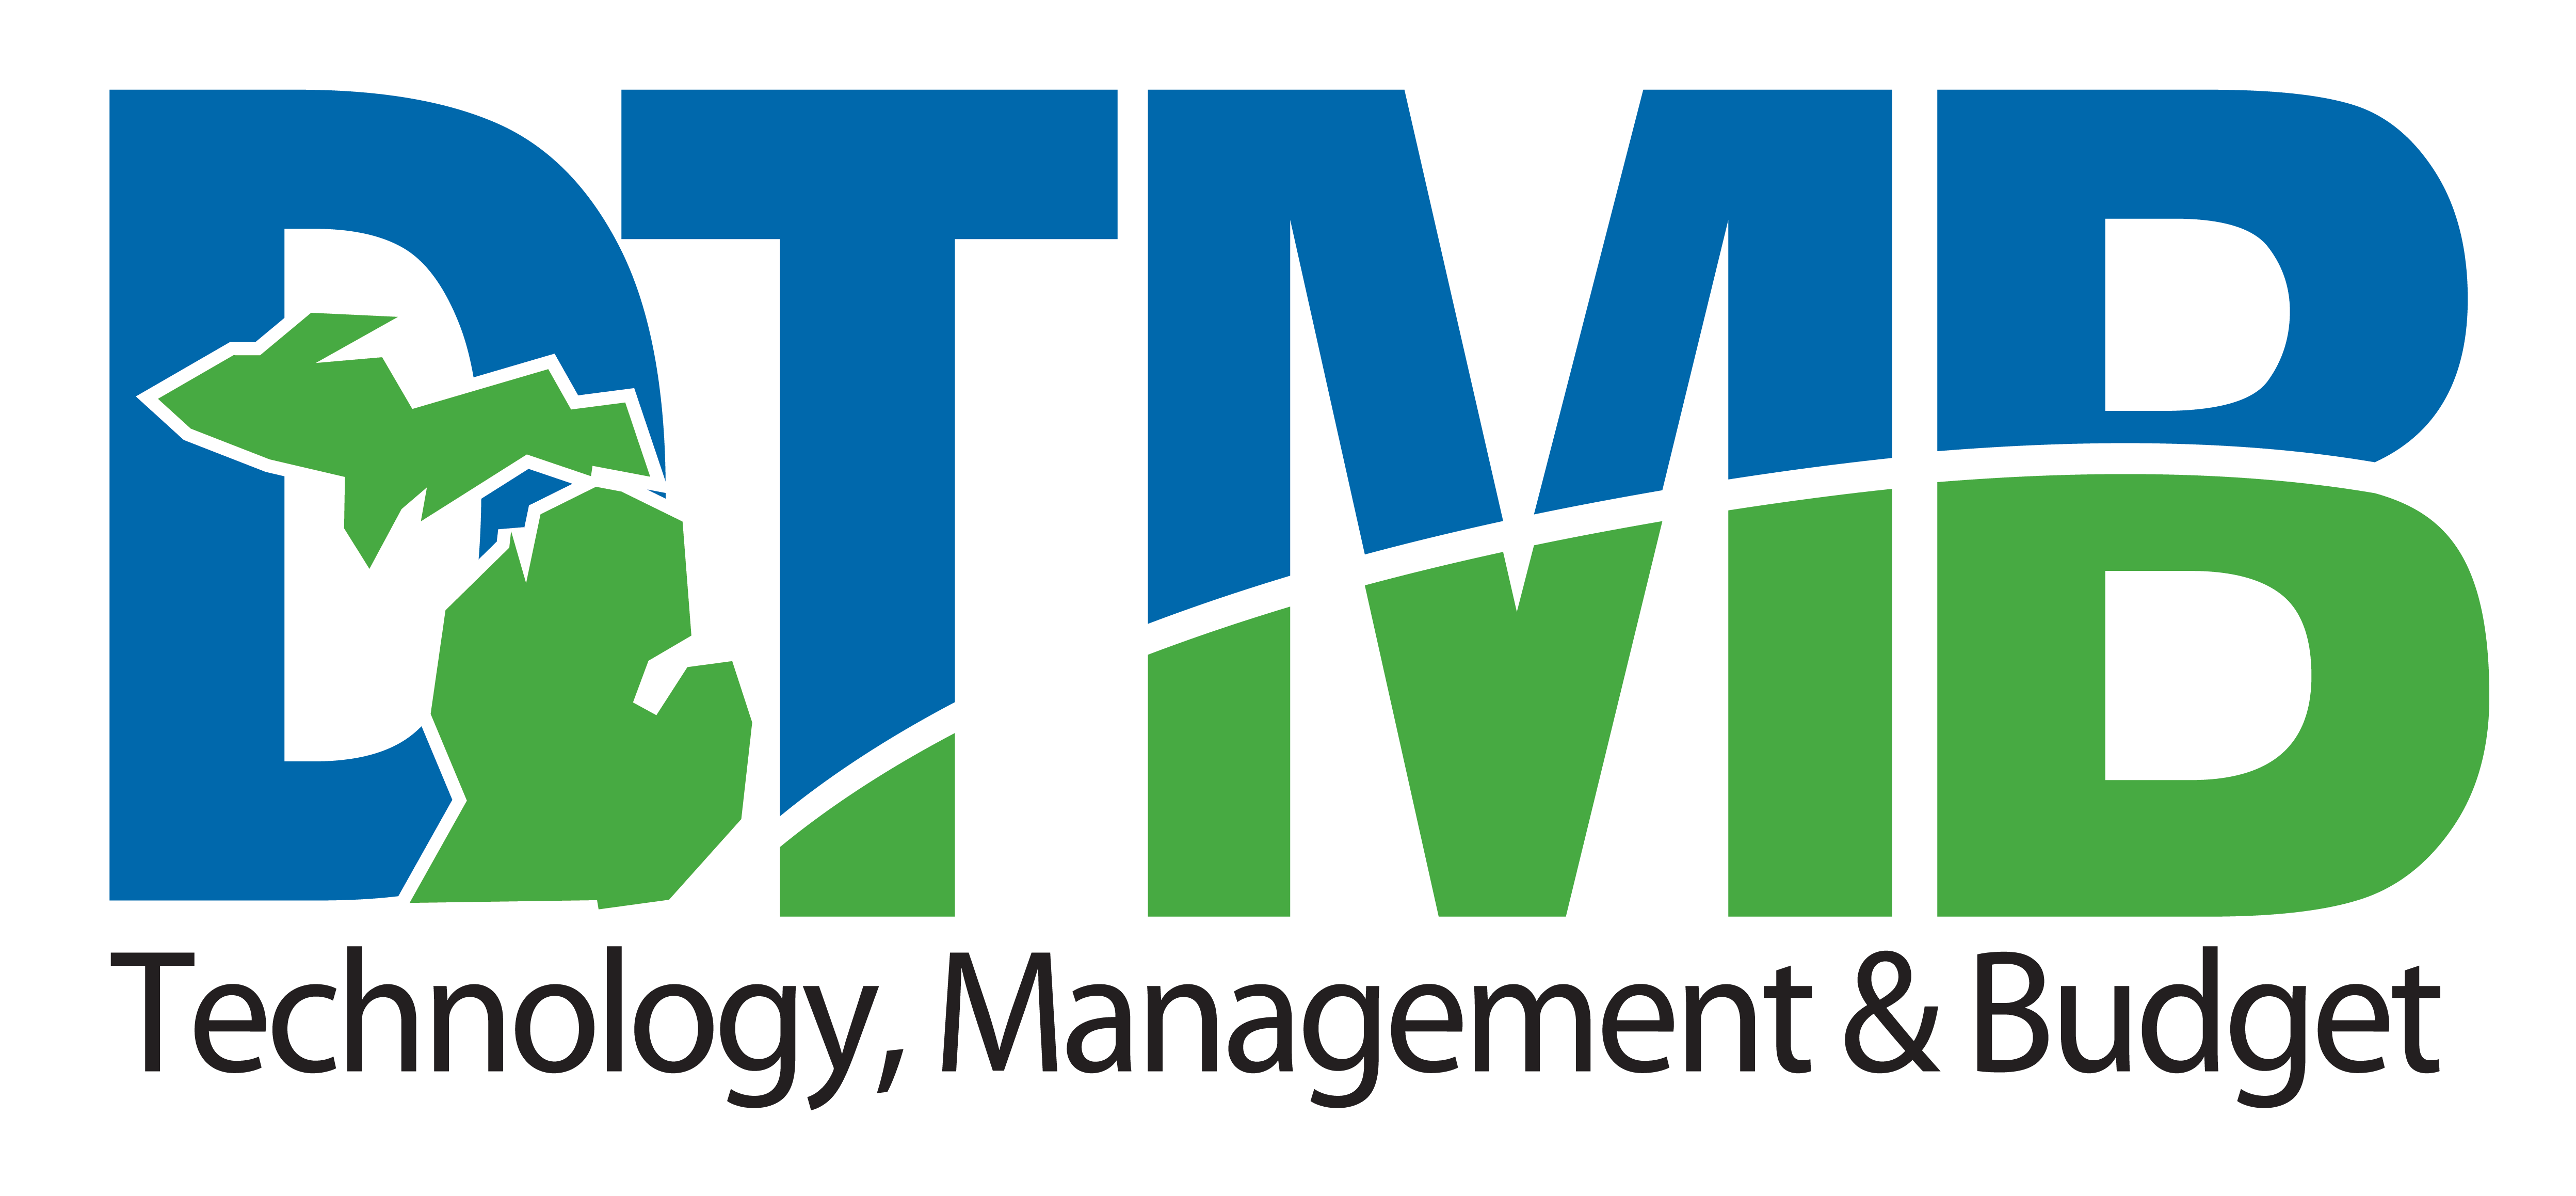 DTMB Logo card image